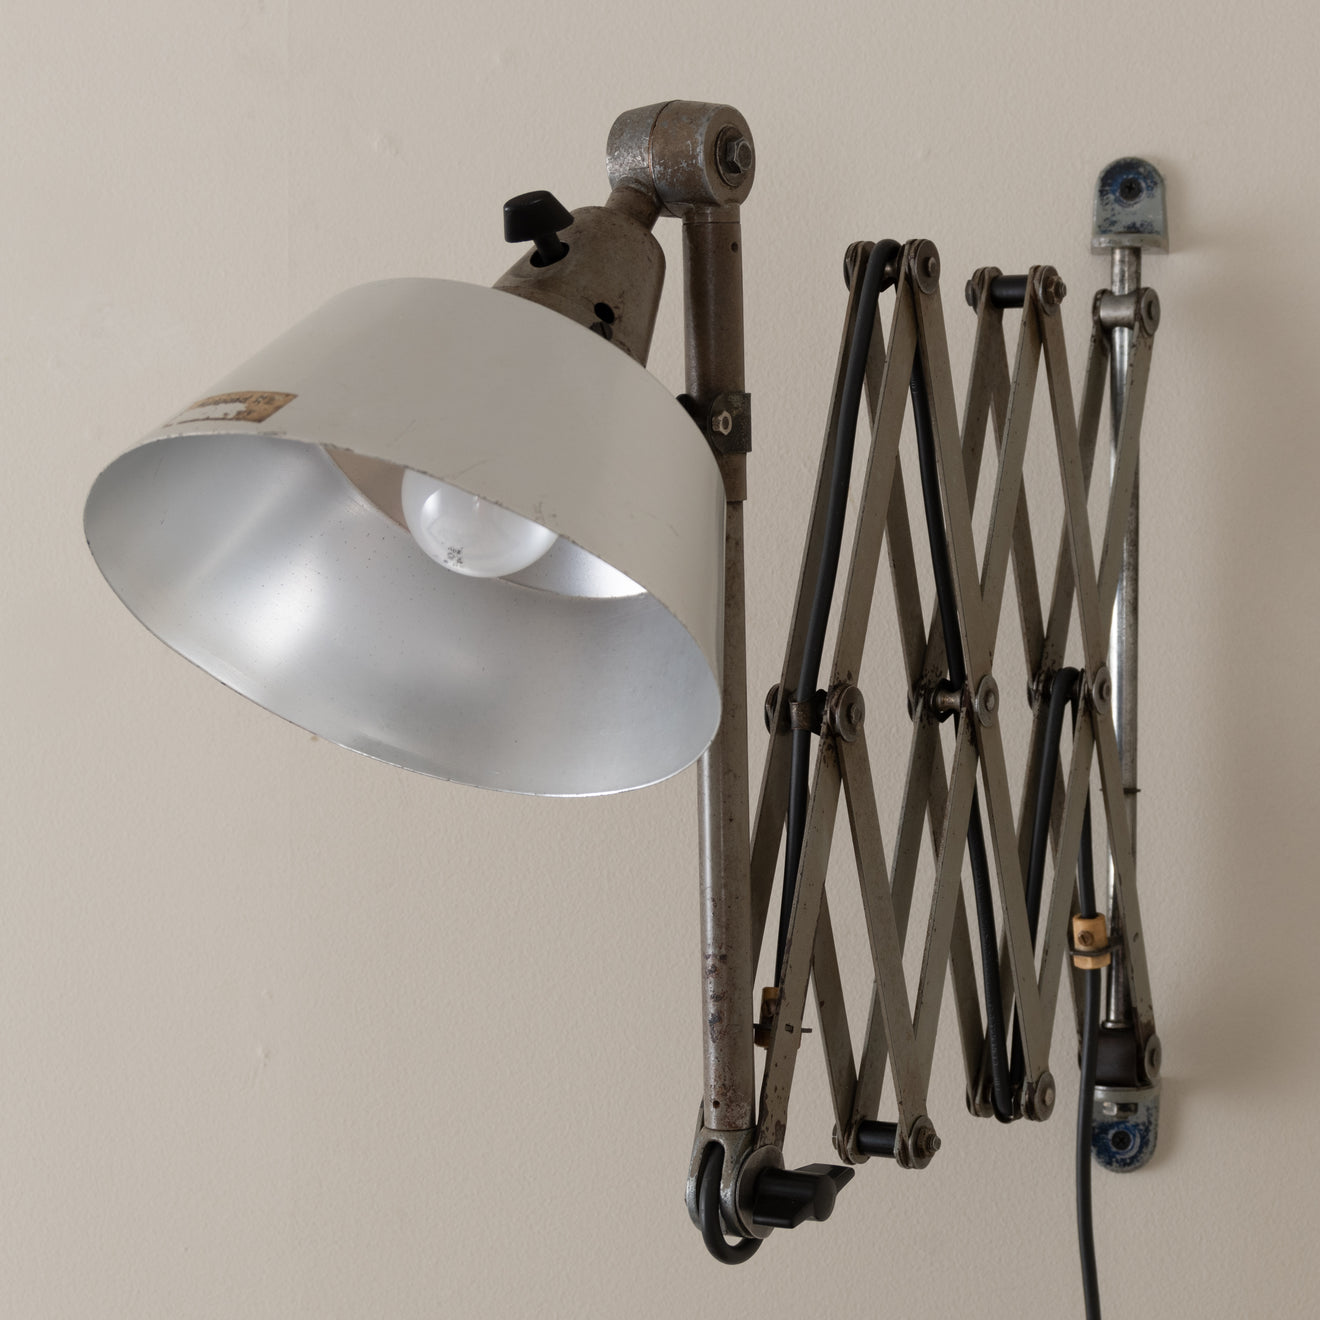 SCISSOR LAMP BY CURT FISCHER FOR MIDGARD